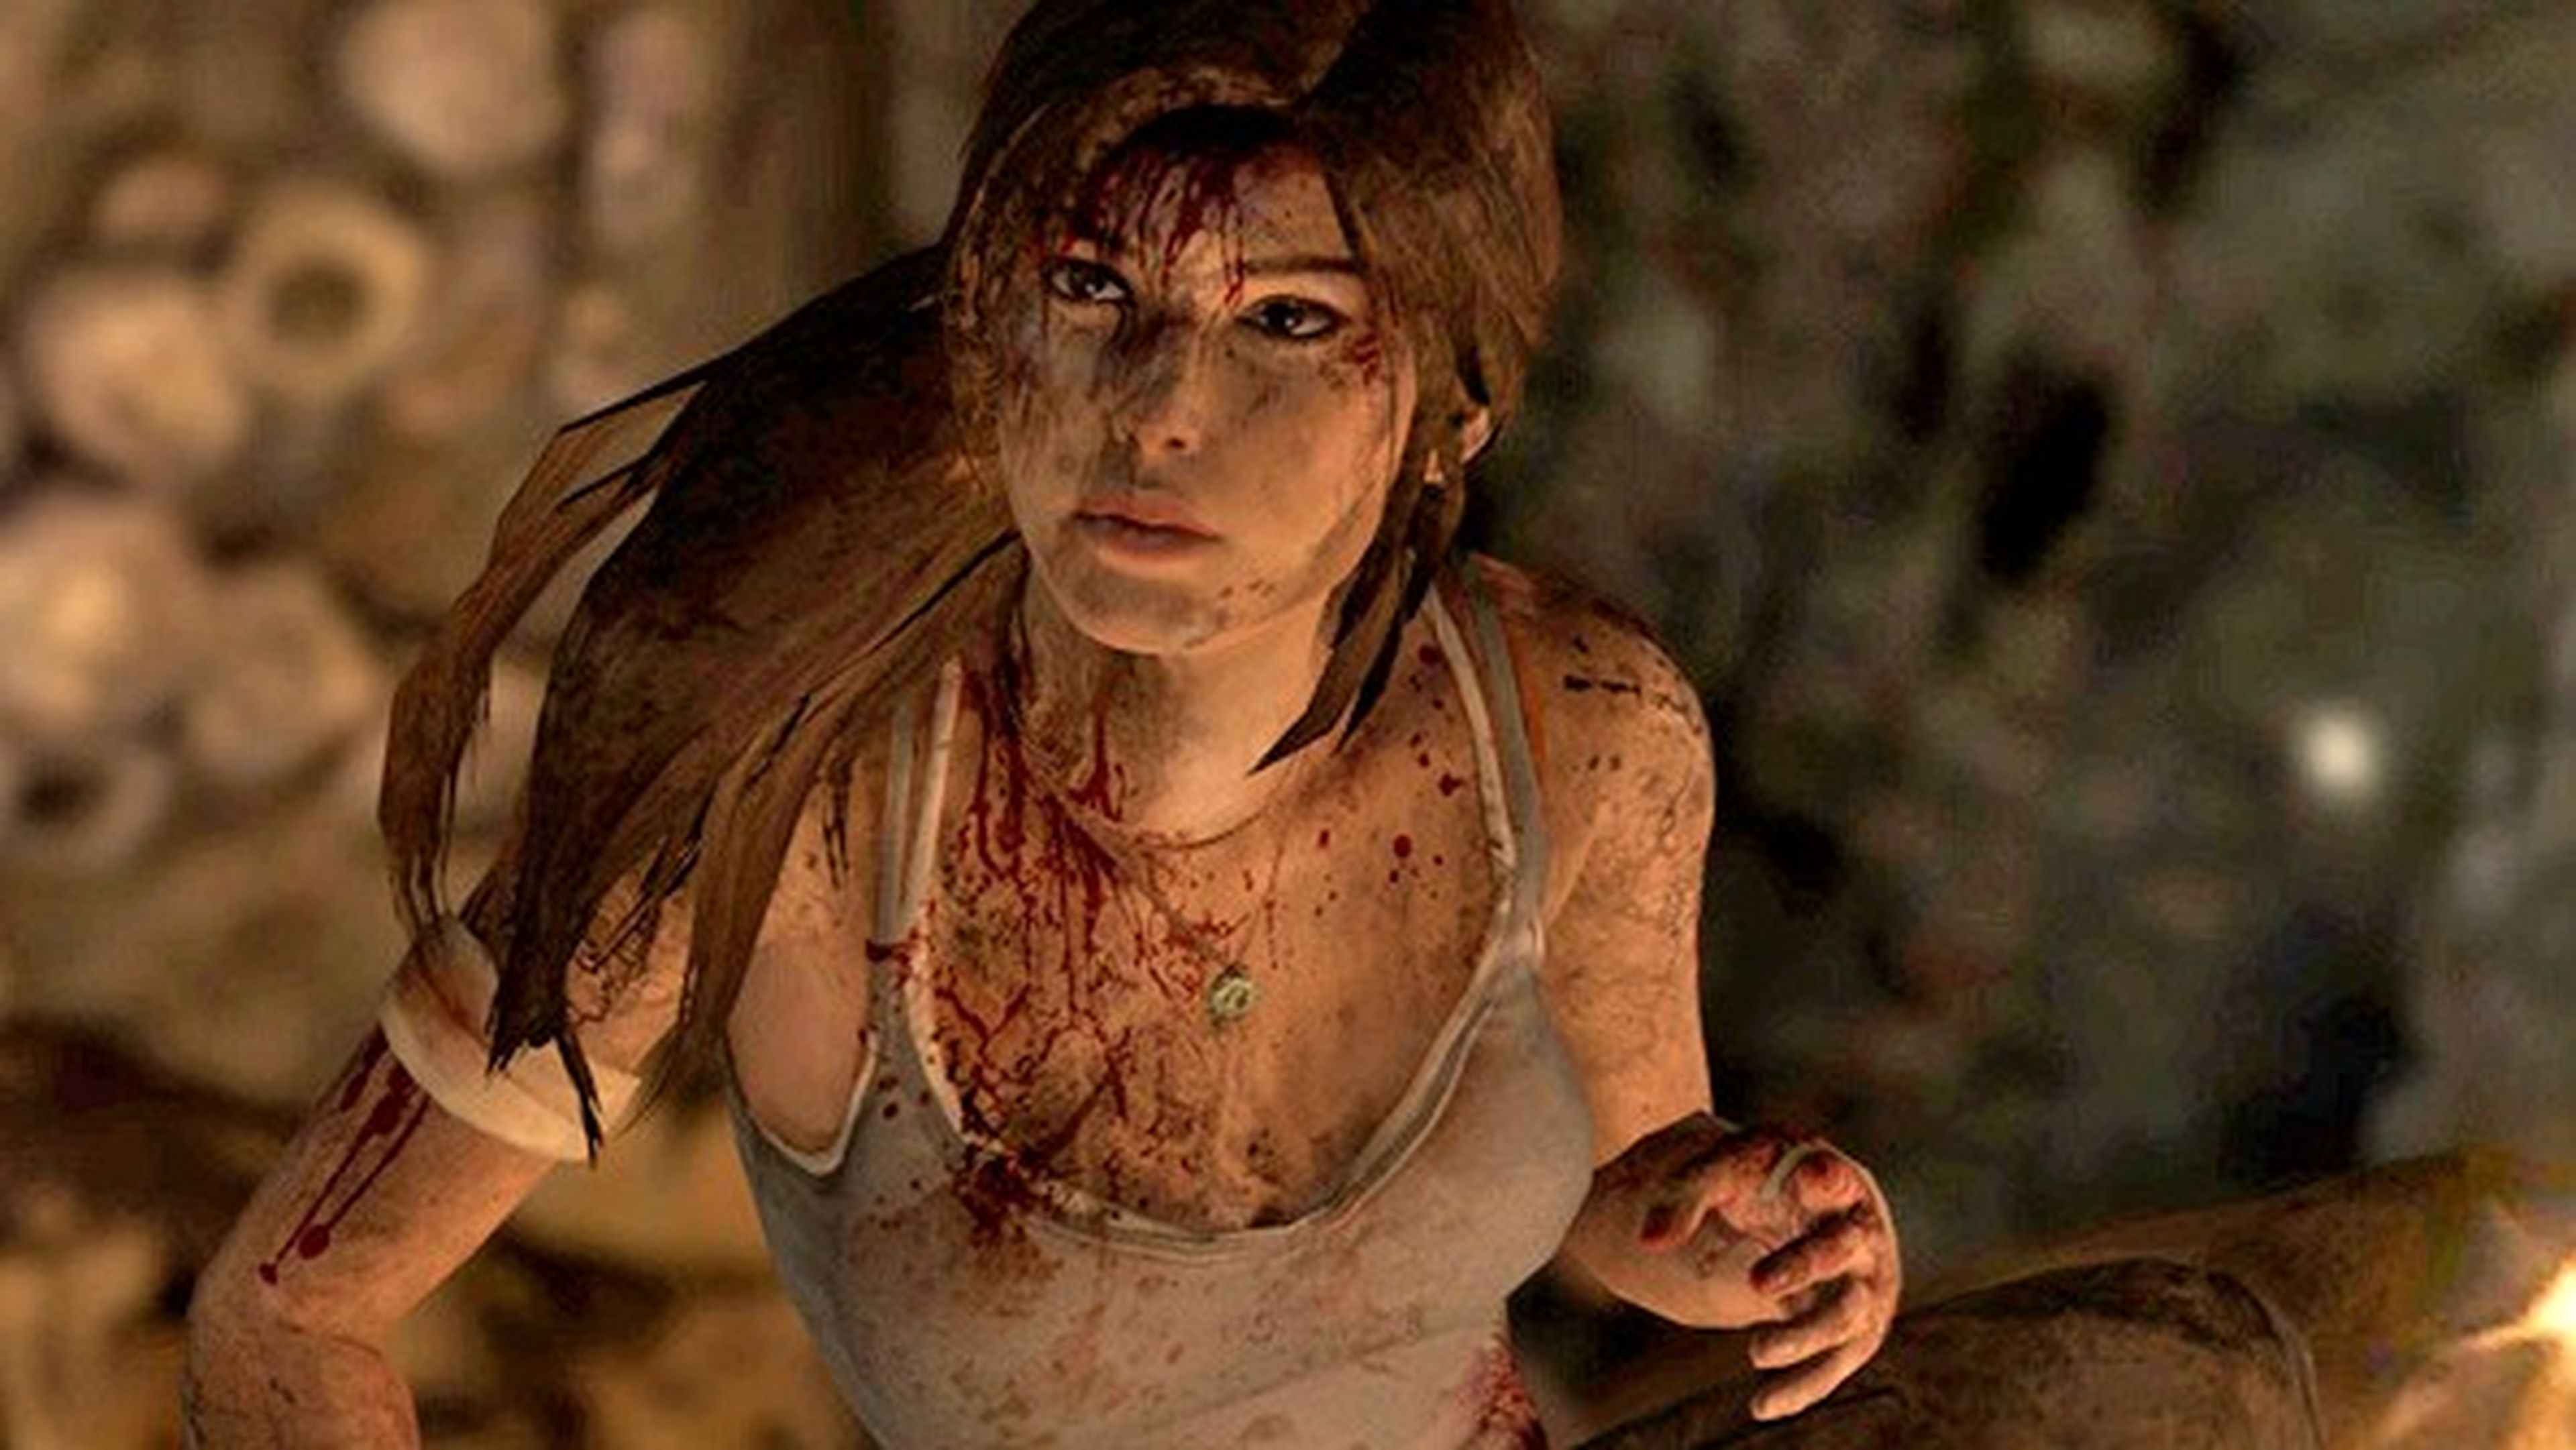 Desvelados detalles del multijugador de Tomb Raider